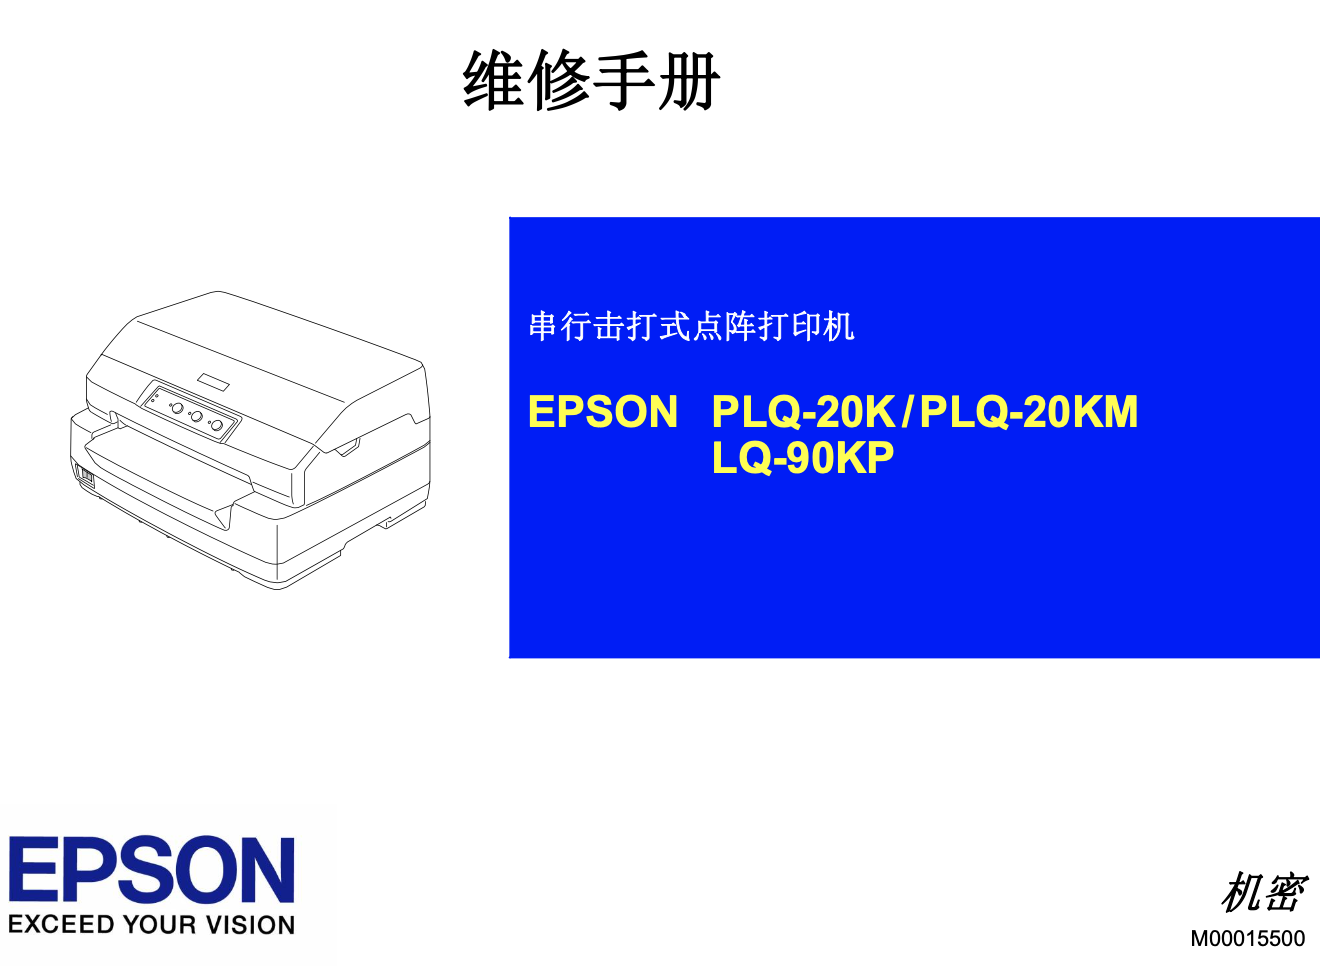 Epson PLQ-20K, PLQ-20KM, LQ-90KP Printer Service Manual, Exploded Diagram and Parts List in Chineese language